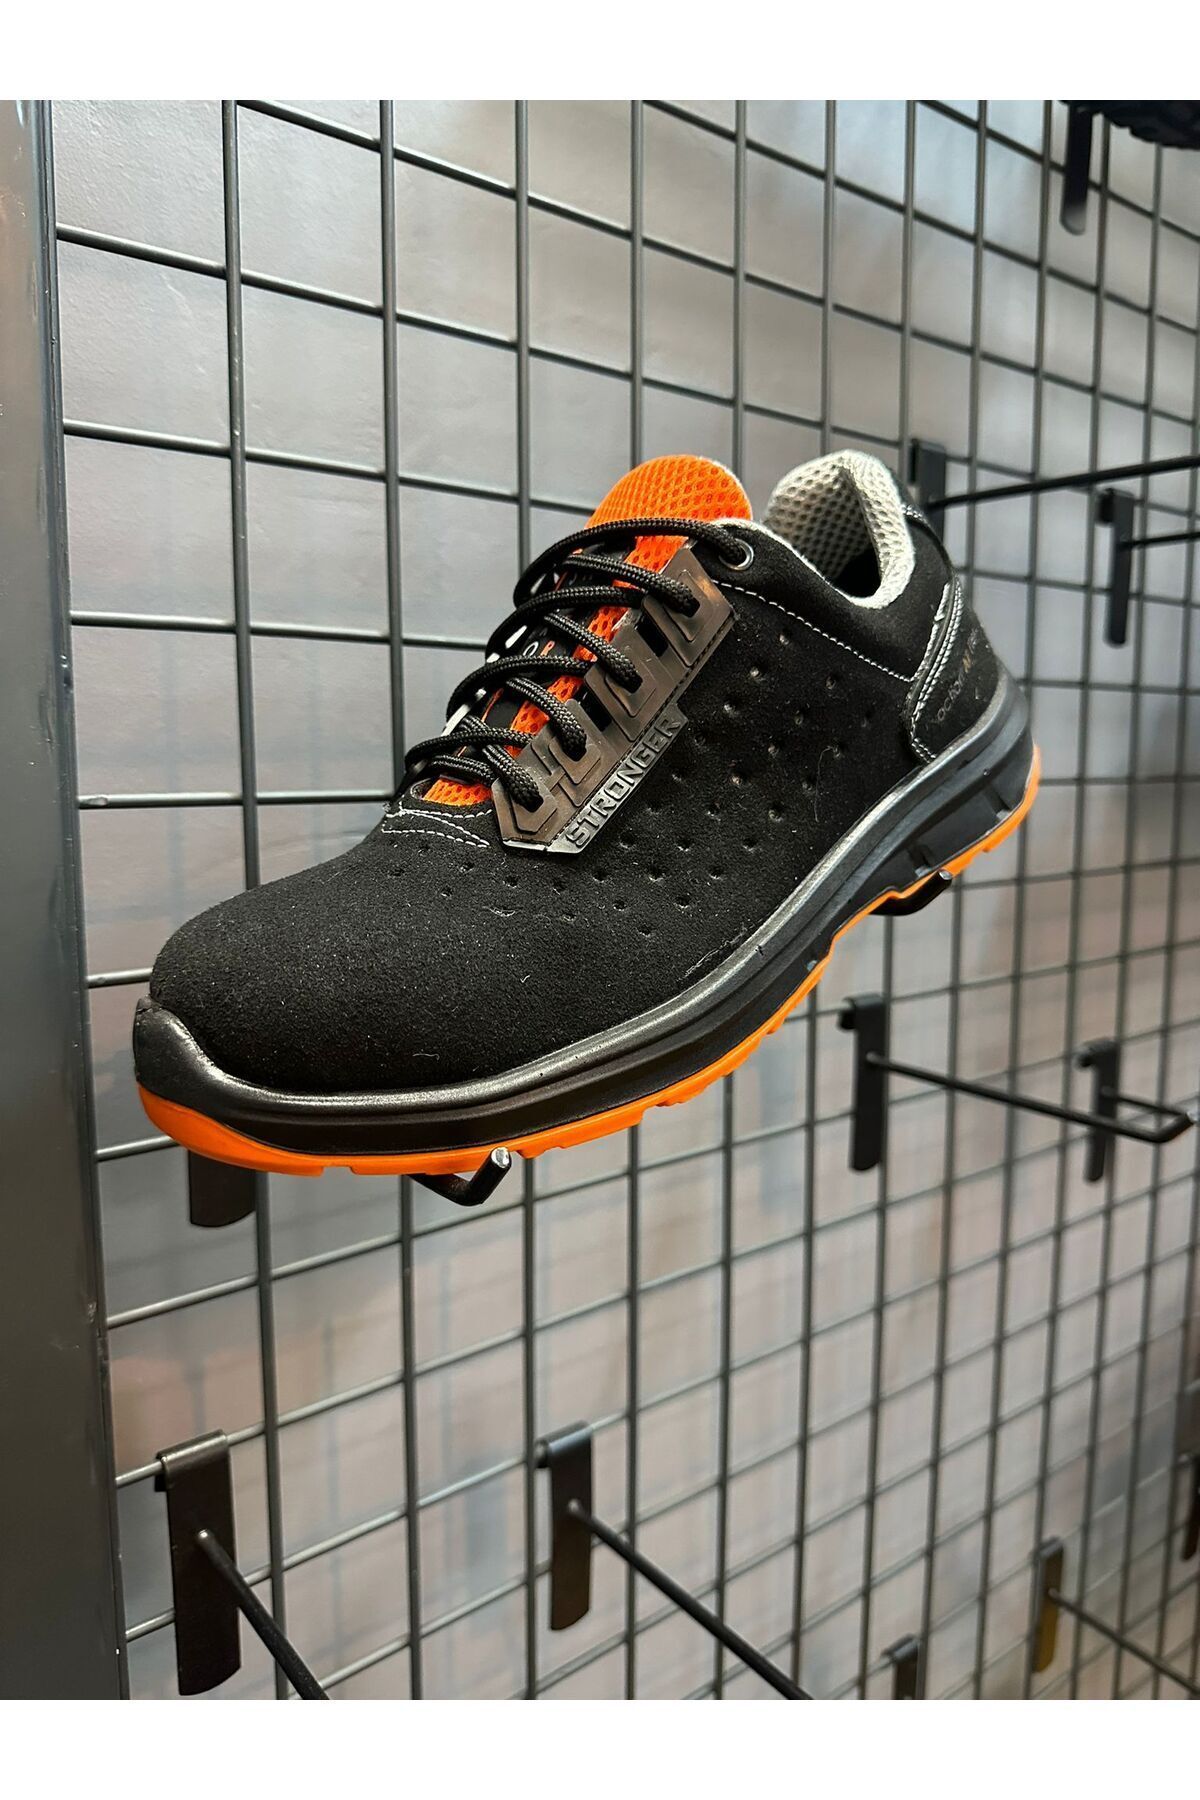 BMES Spor İş Ayakkabısı Ortopedik Mostra Süet Siyah Mikro Fiber Saya